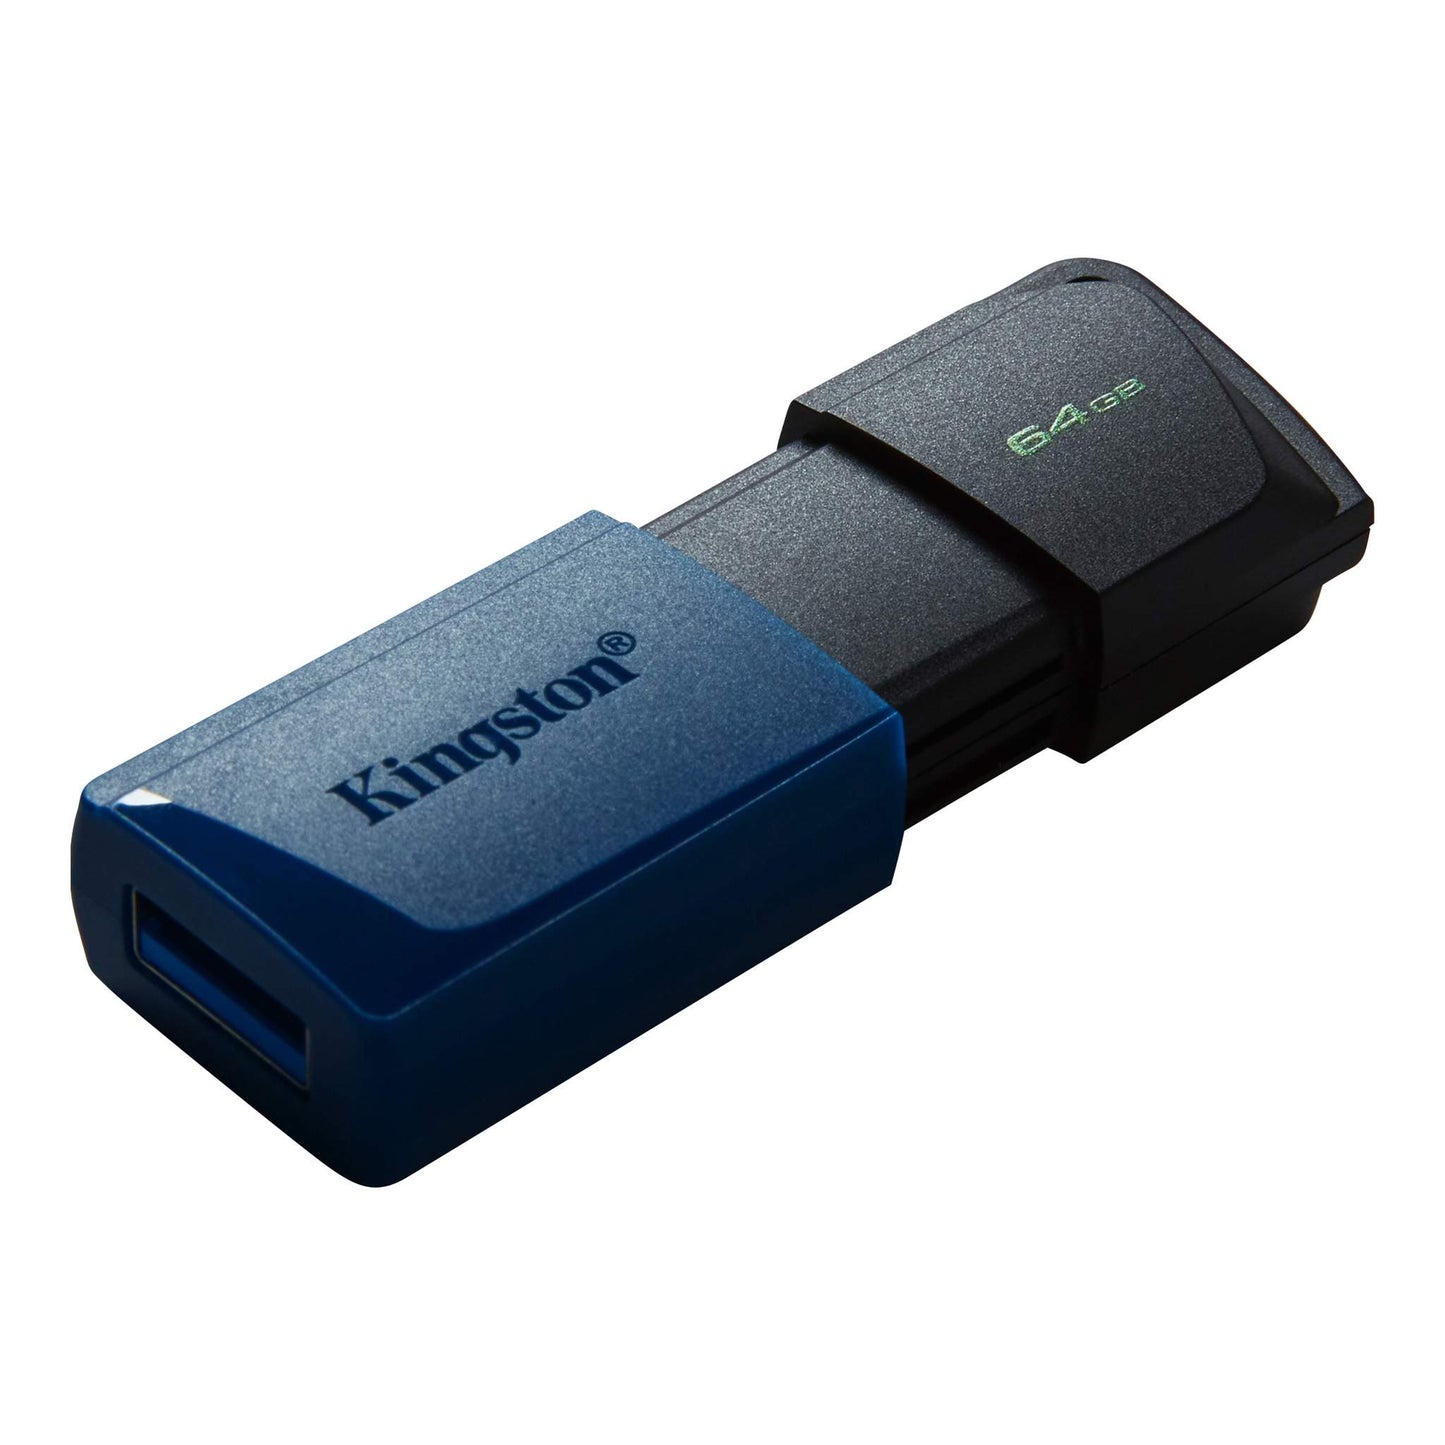 Kingston DataTraveler Exodia M 64GB USB 3.2 Portable Flash Drive